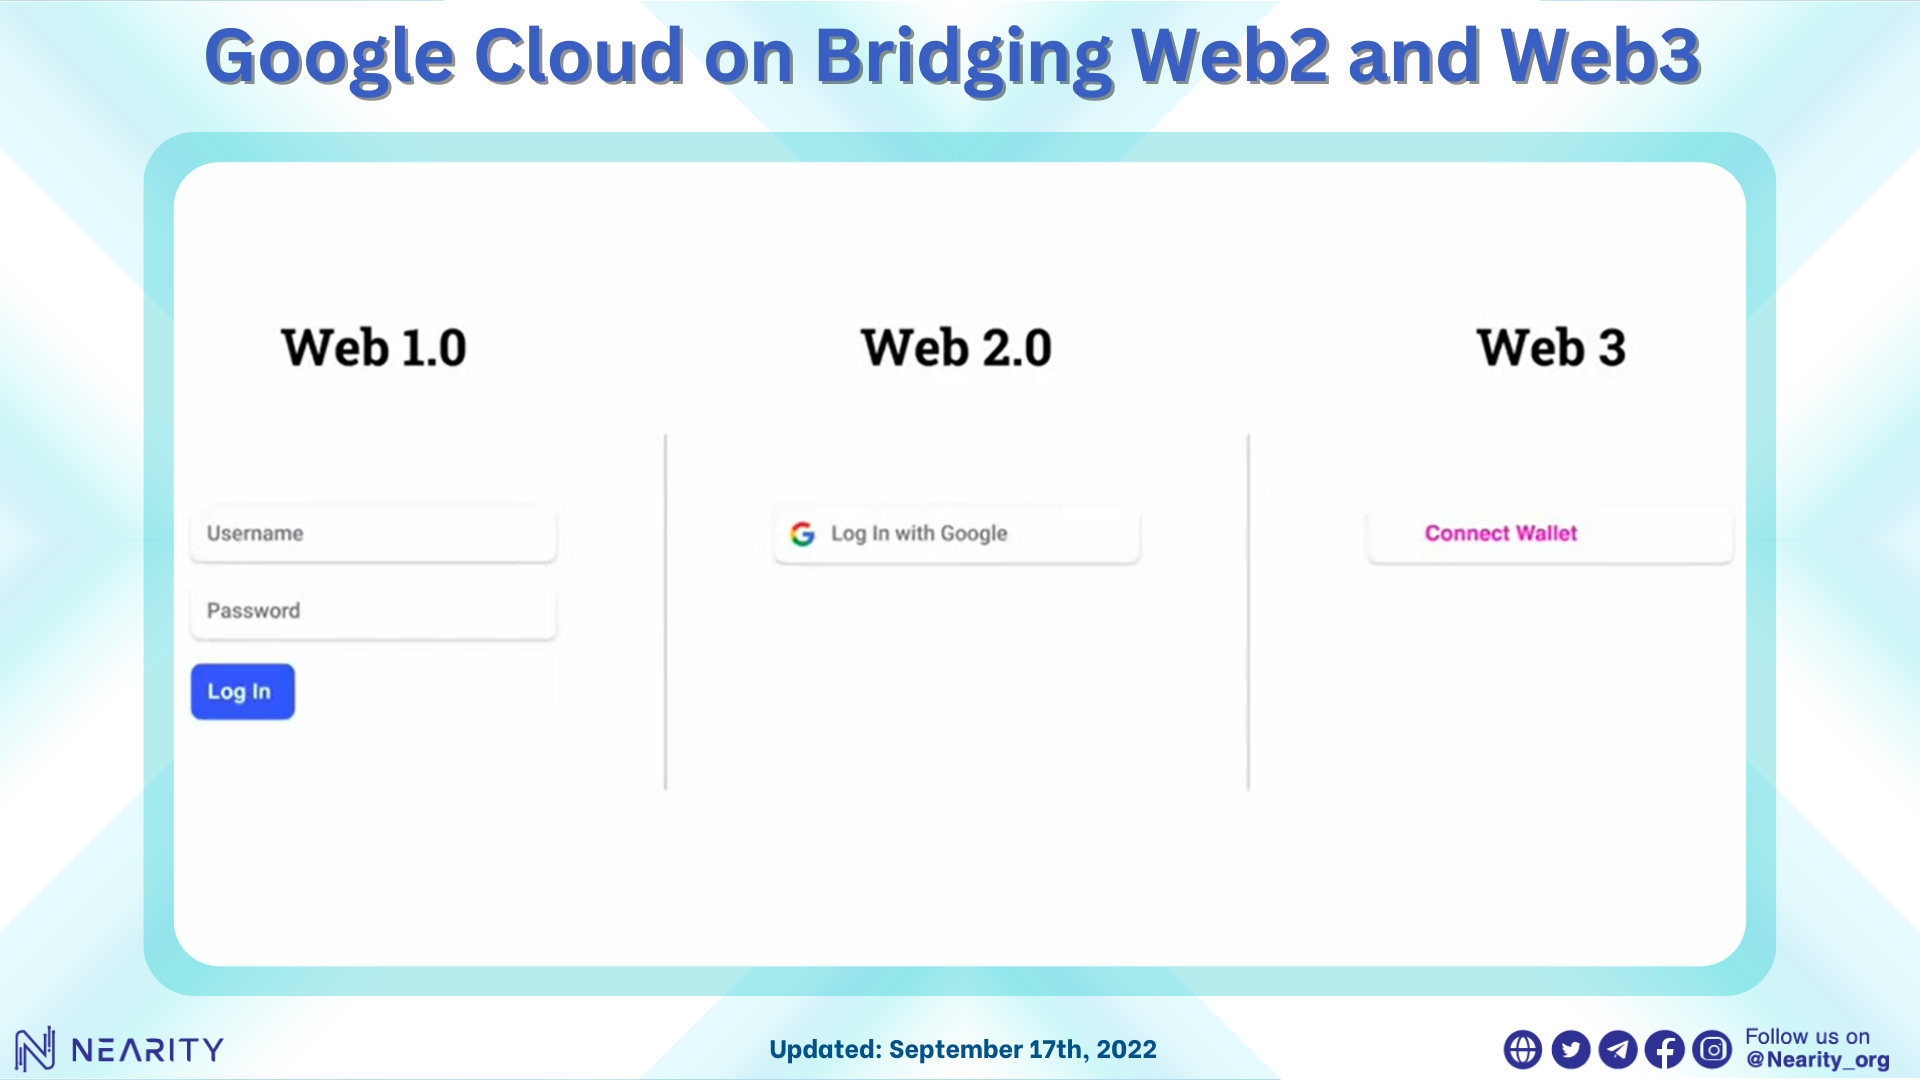 Google cloud on bridging web2 to web3